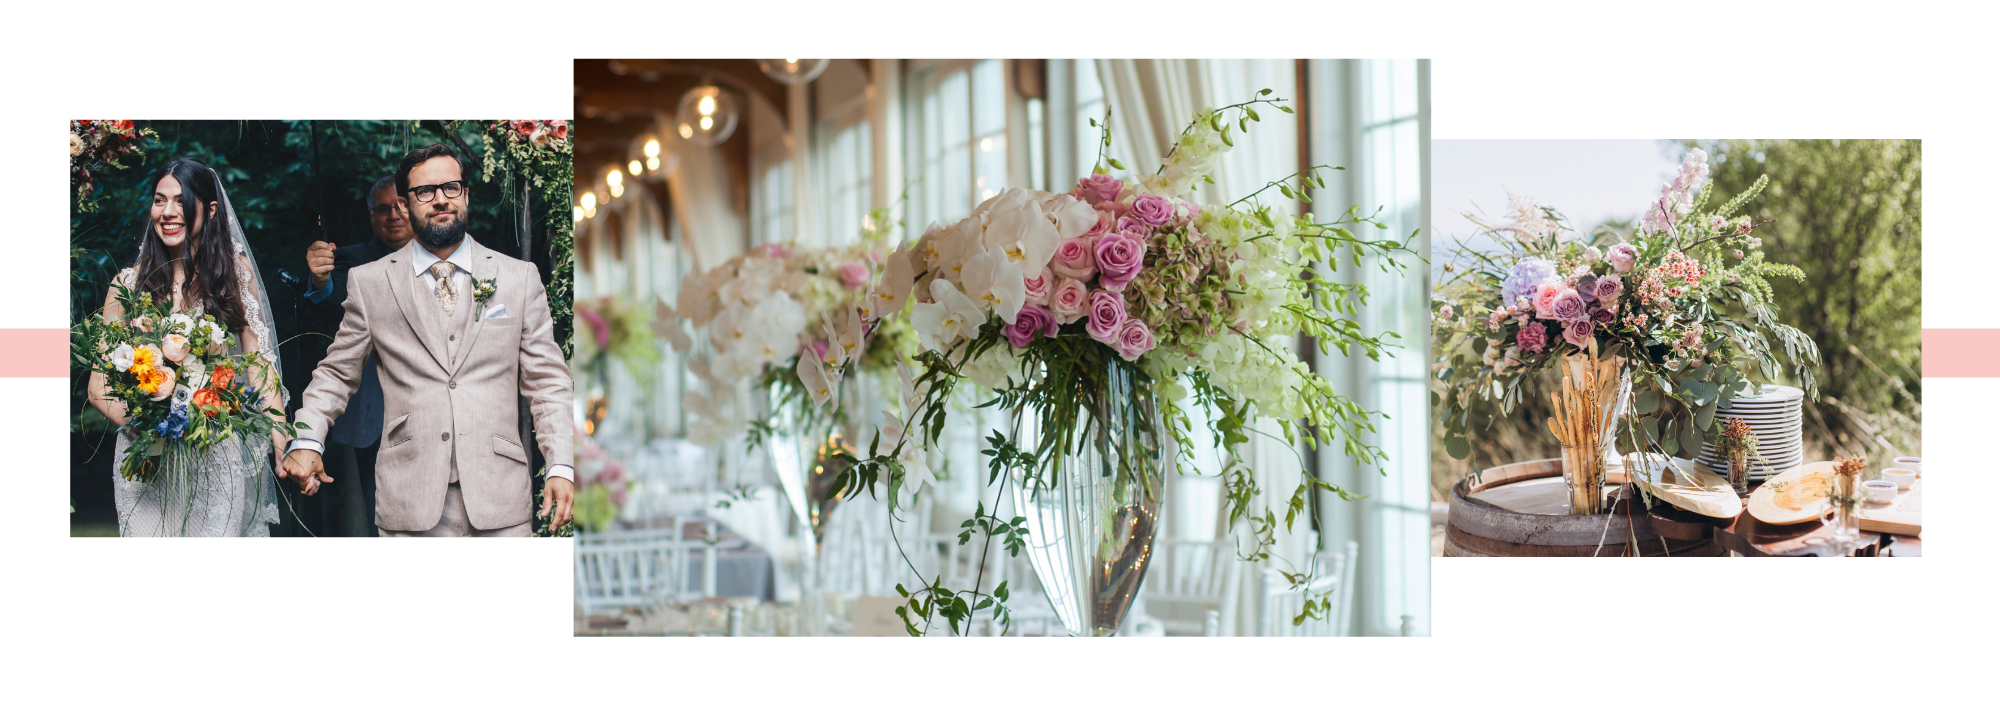 wedding floral design collage 